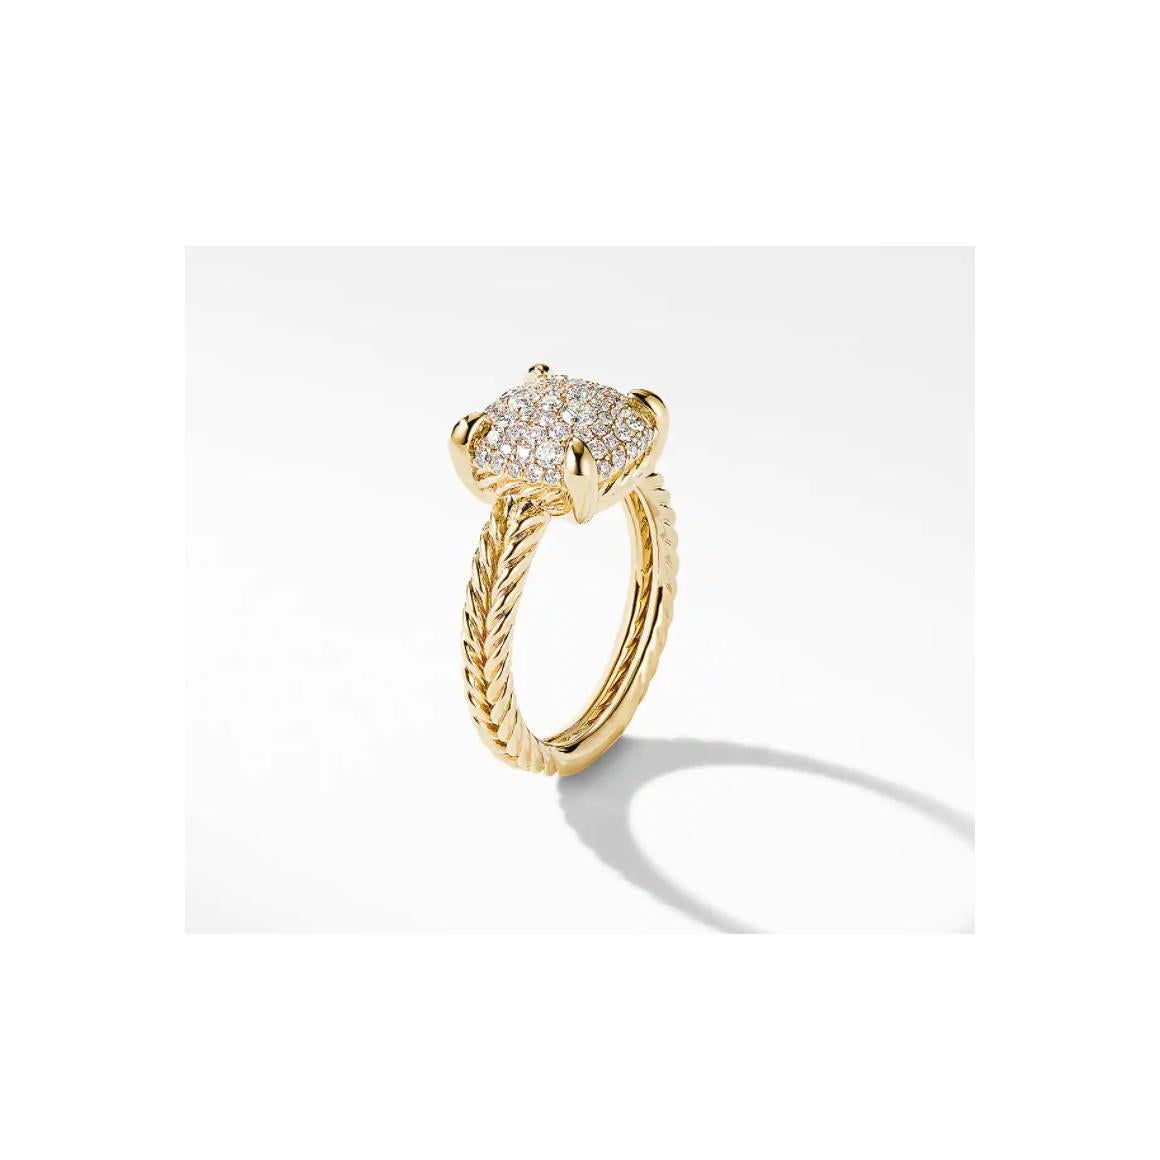 Round Cut David Yurman Chatelaine Ring in 18k Yellow Gold with Full Pavé Diamonds